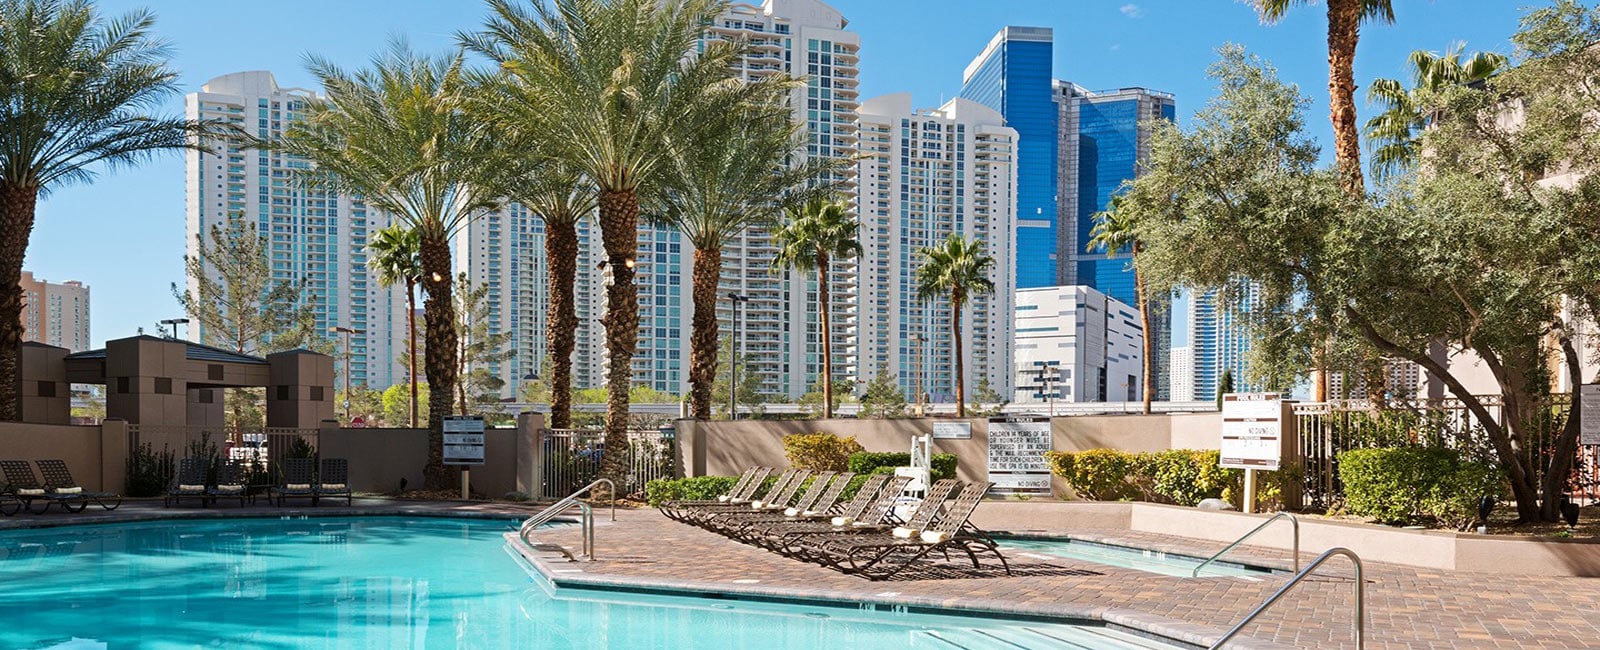 Pool Area of Hilton Grand Vacations on Paradise in Las Vegas, Nevada